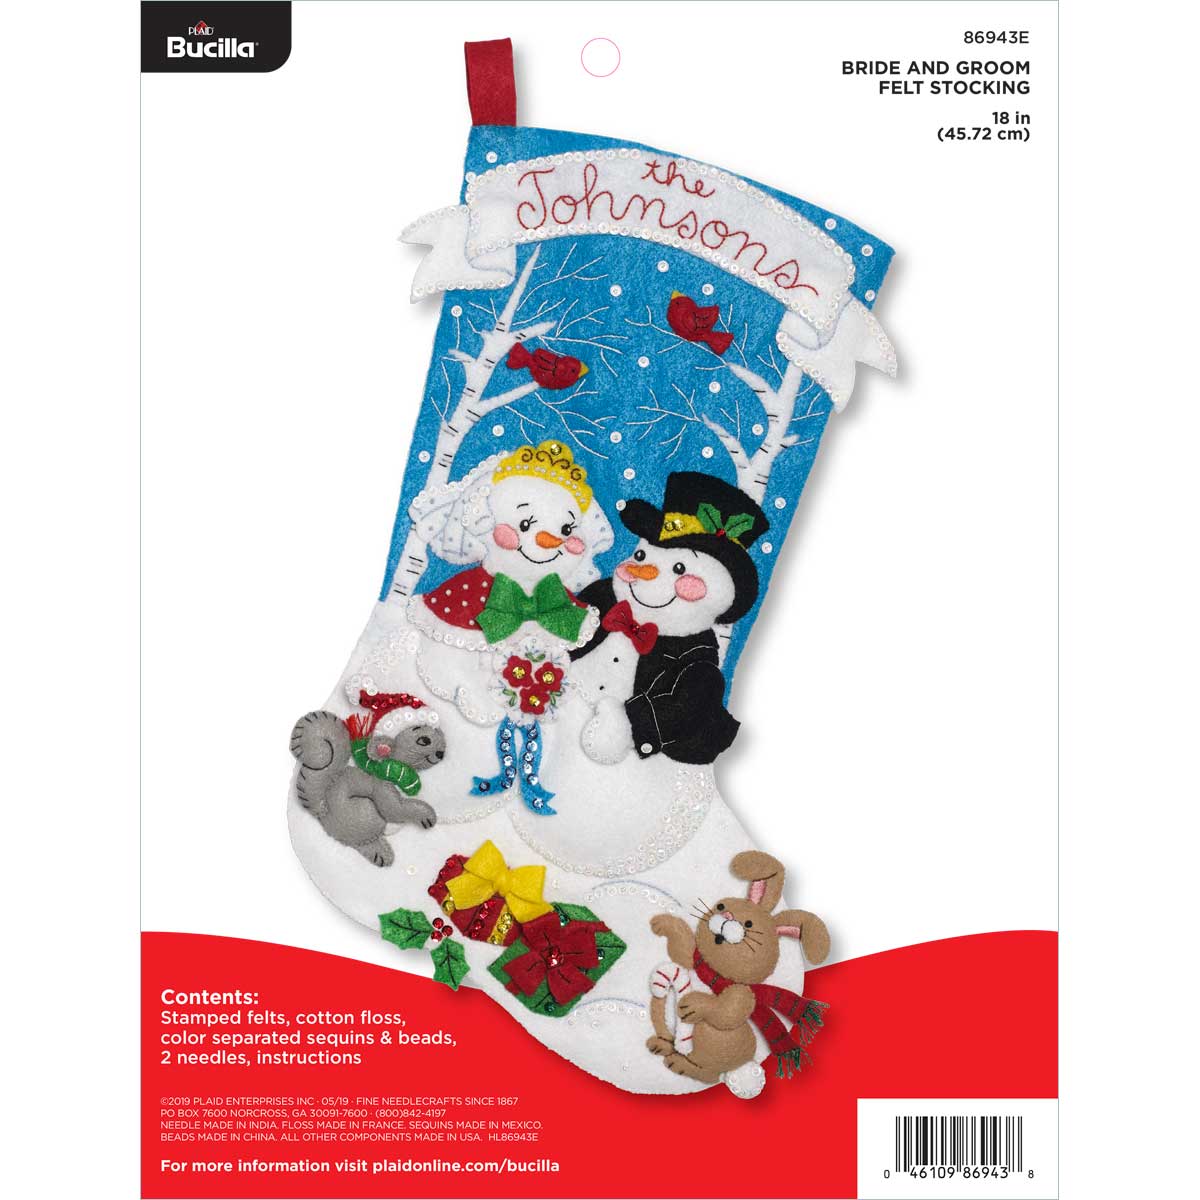 Bucilla ® Seasonal - Felt - Stocking Kits - Bride and Groom - 86943E